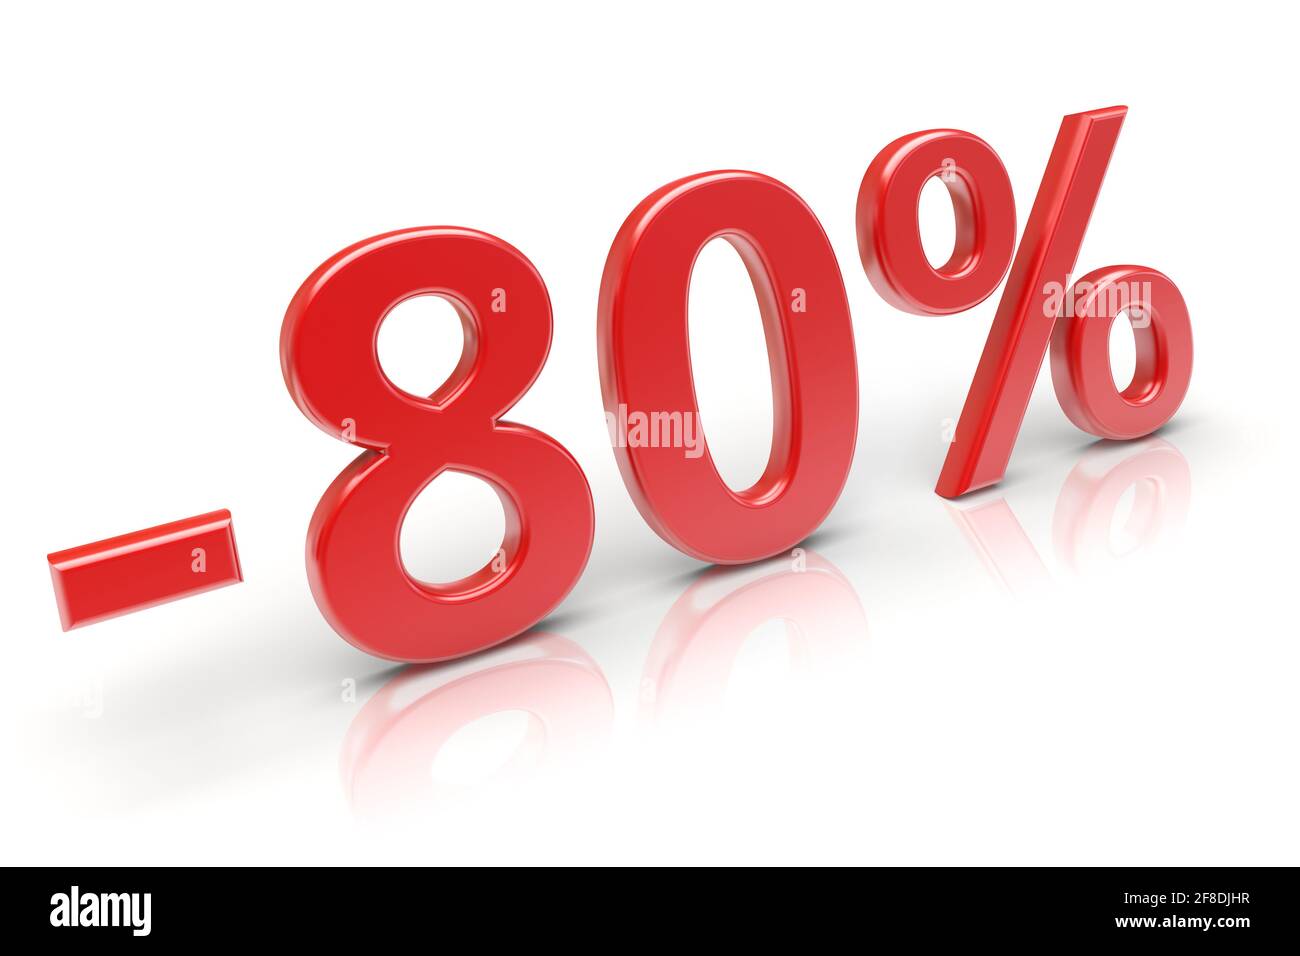 80 percent sale discount. 3d image Stock Photo